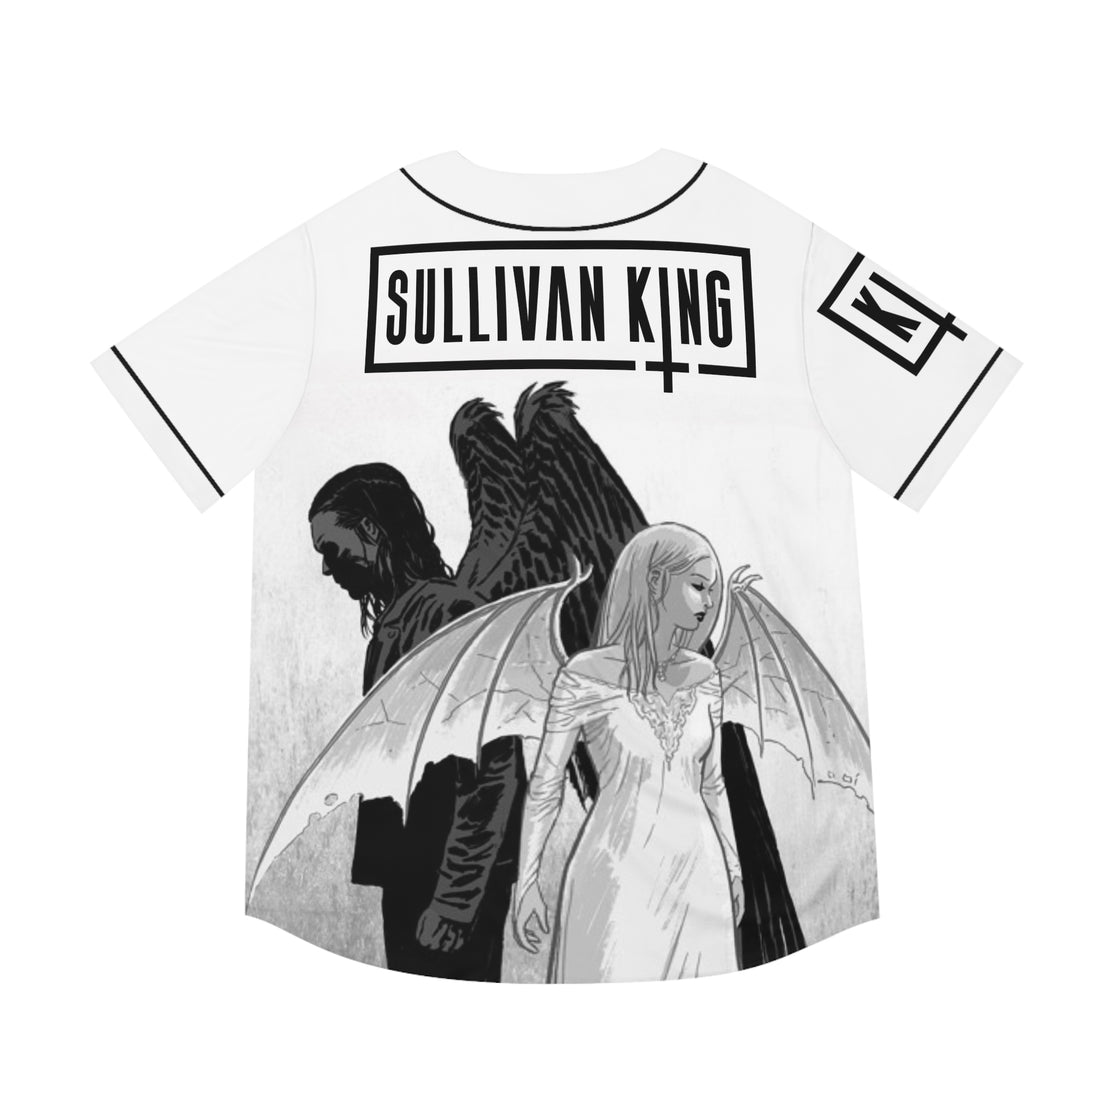 Sullivan King Jersey (Black & White)